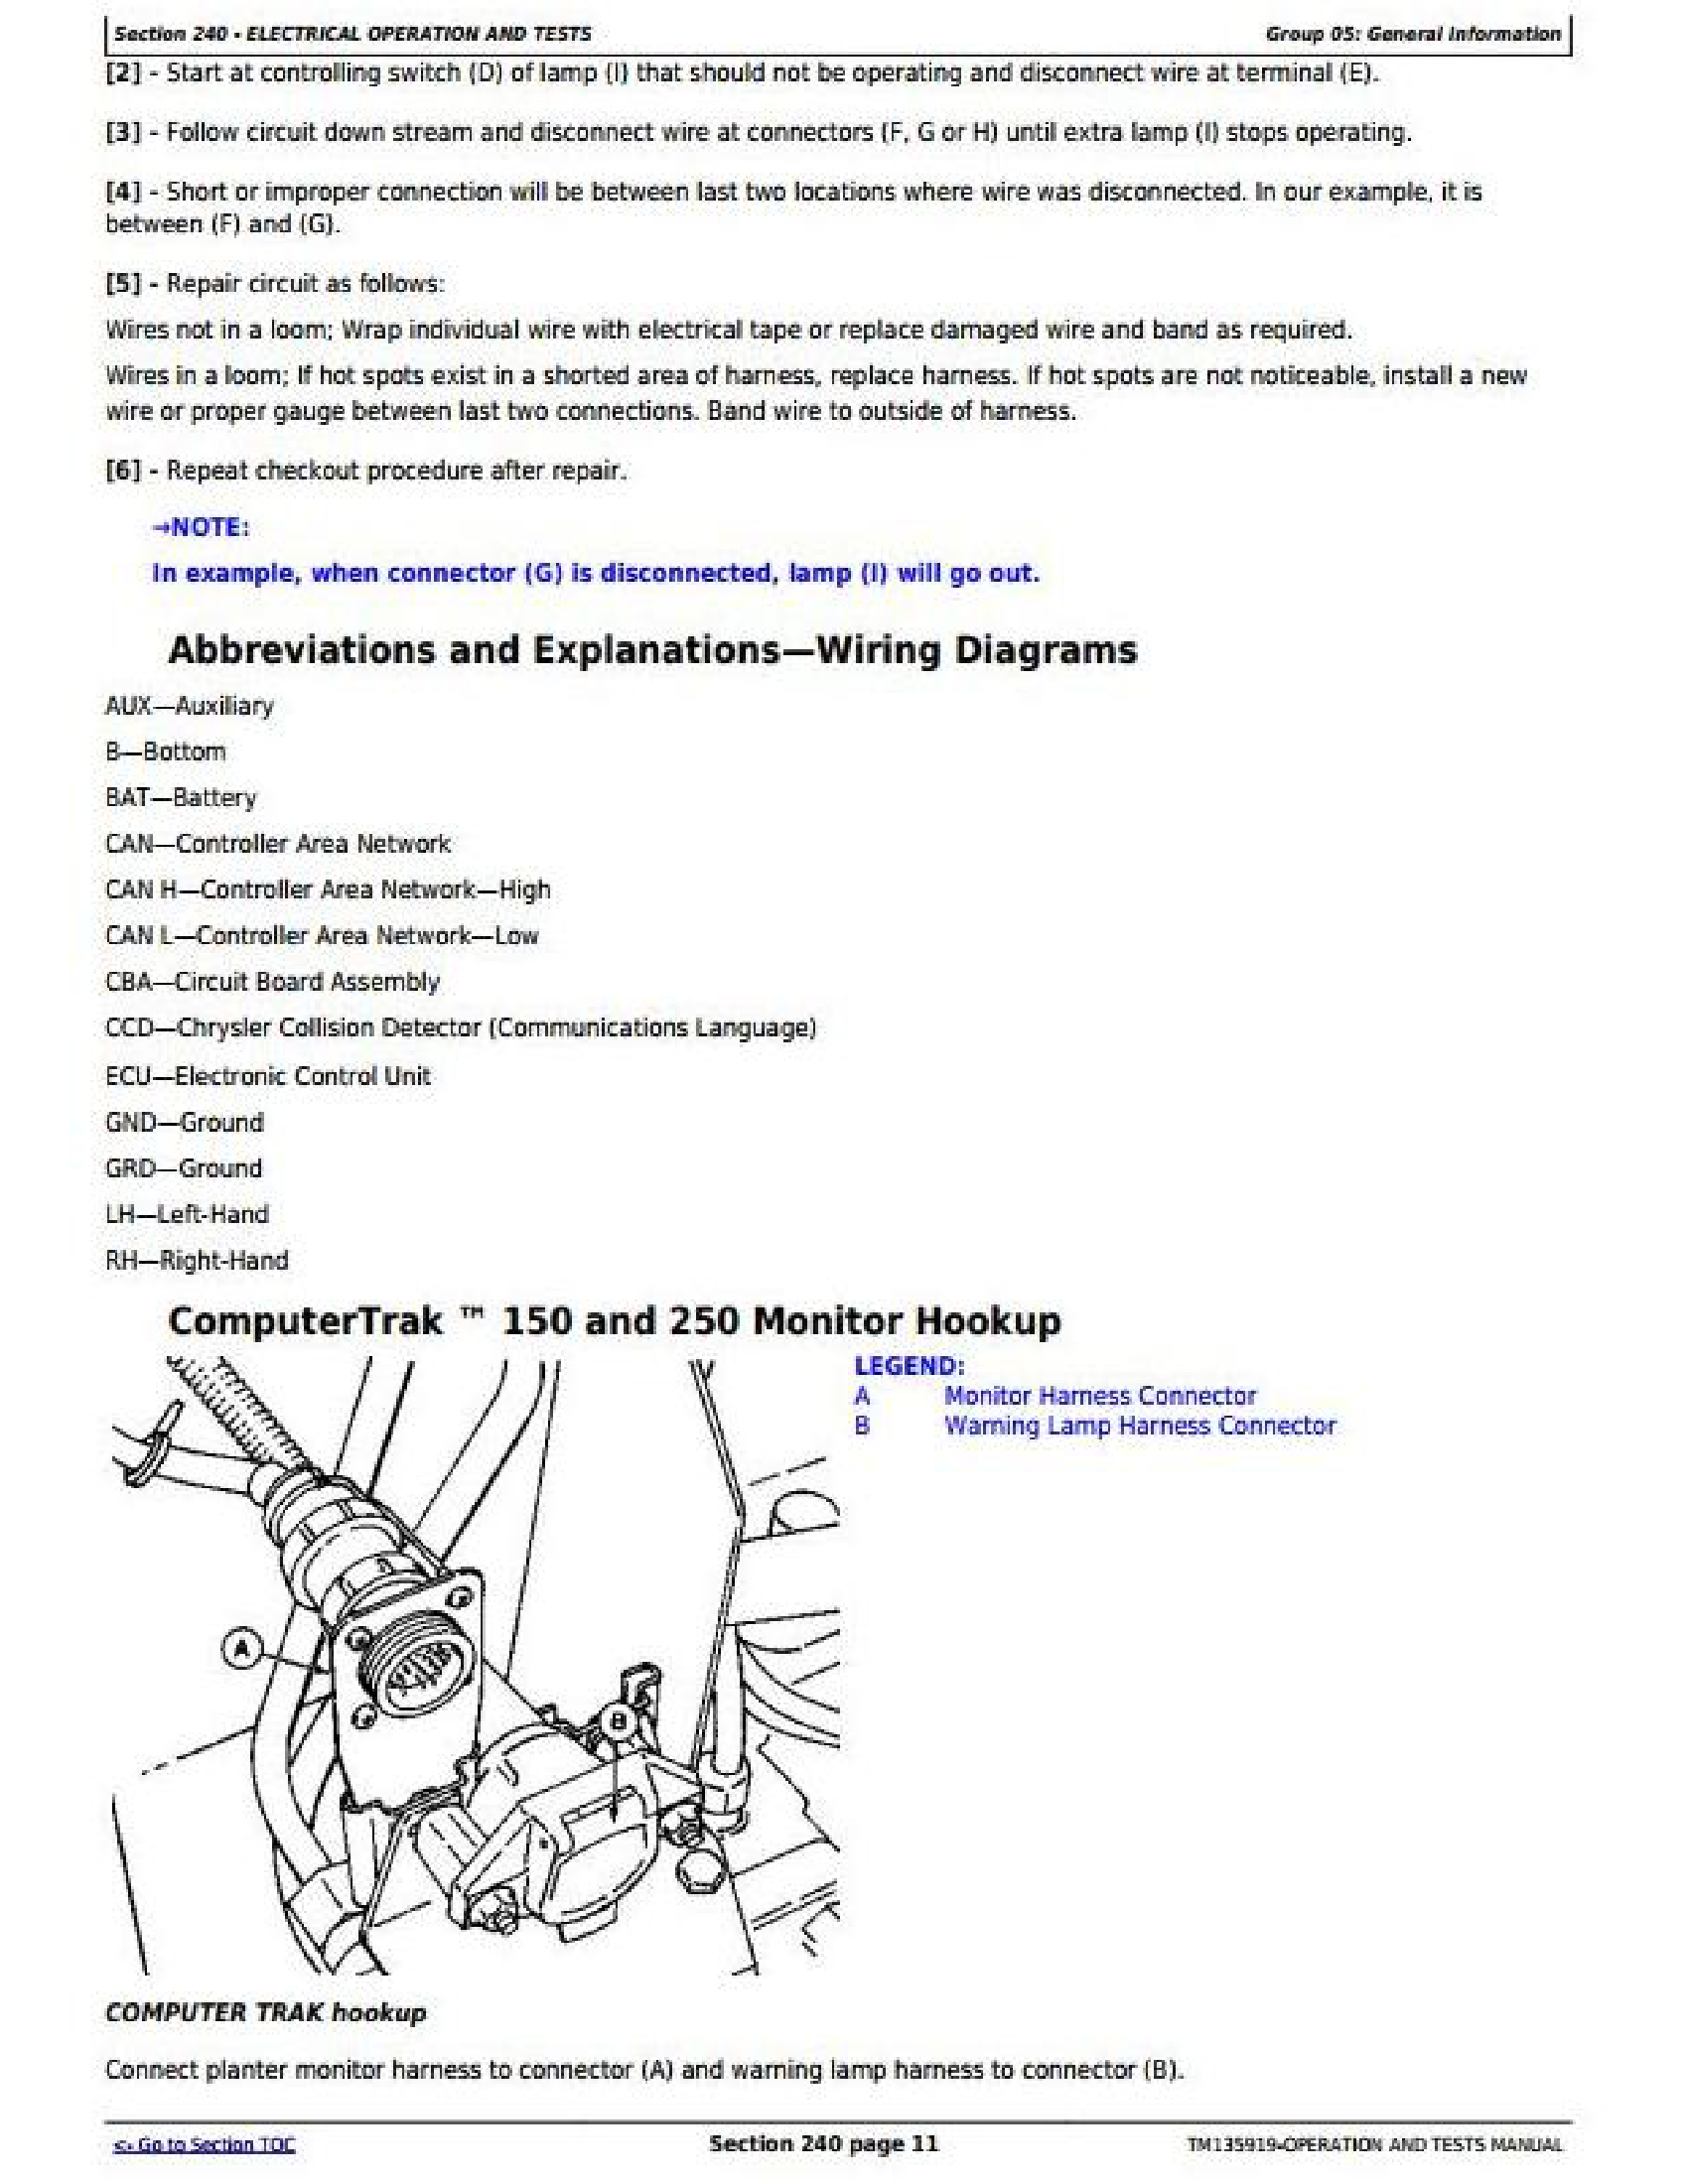 John Deere 7800 manual